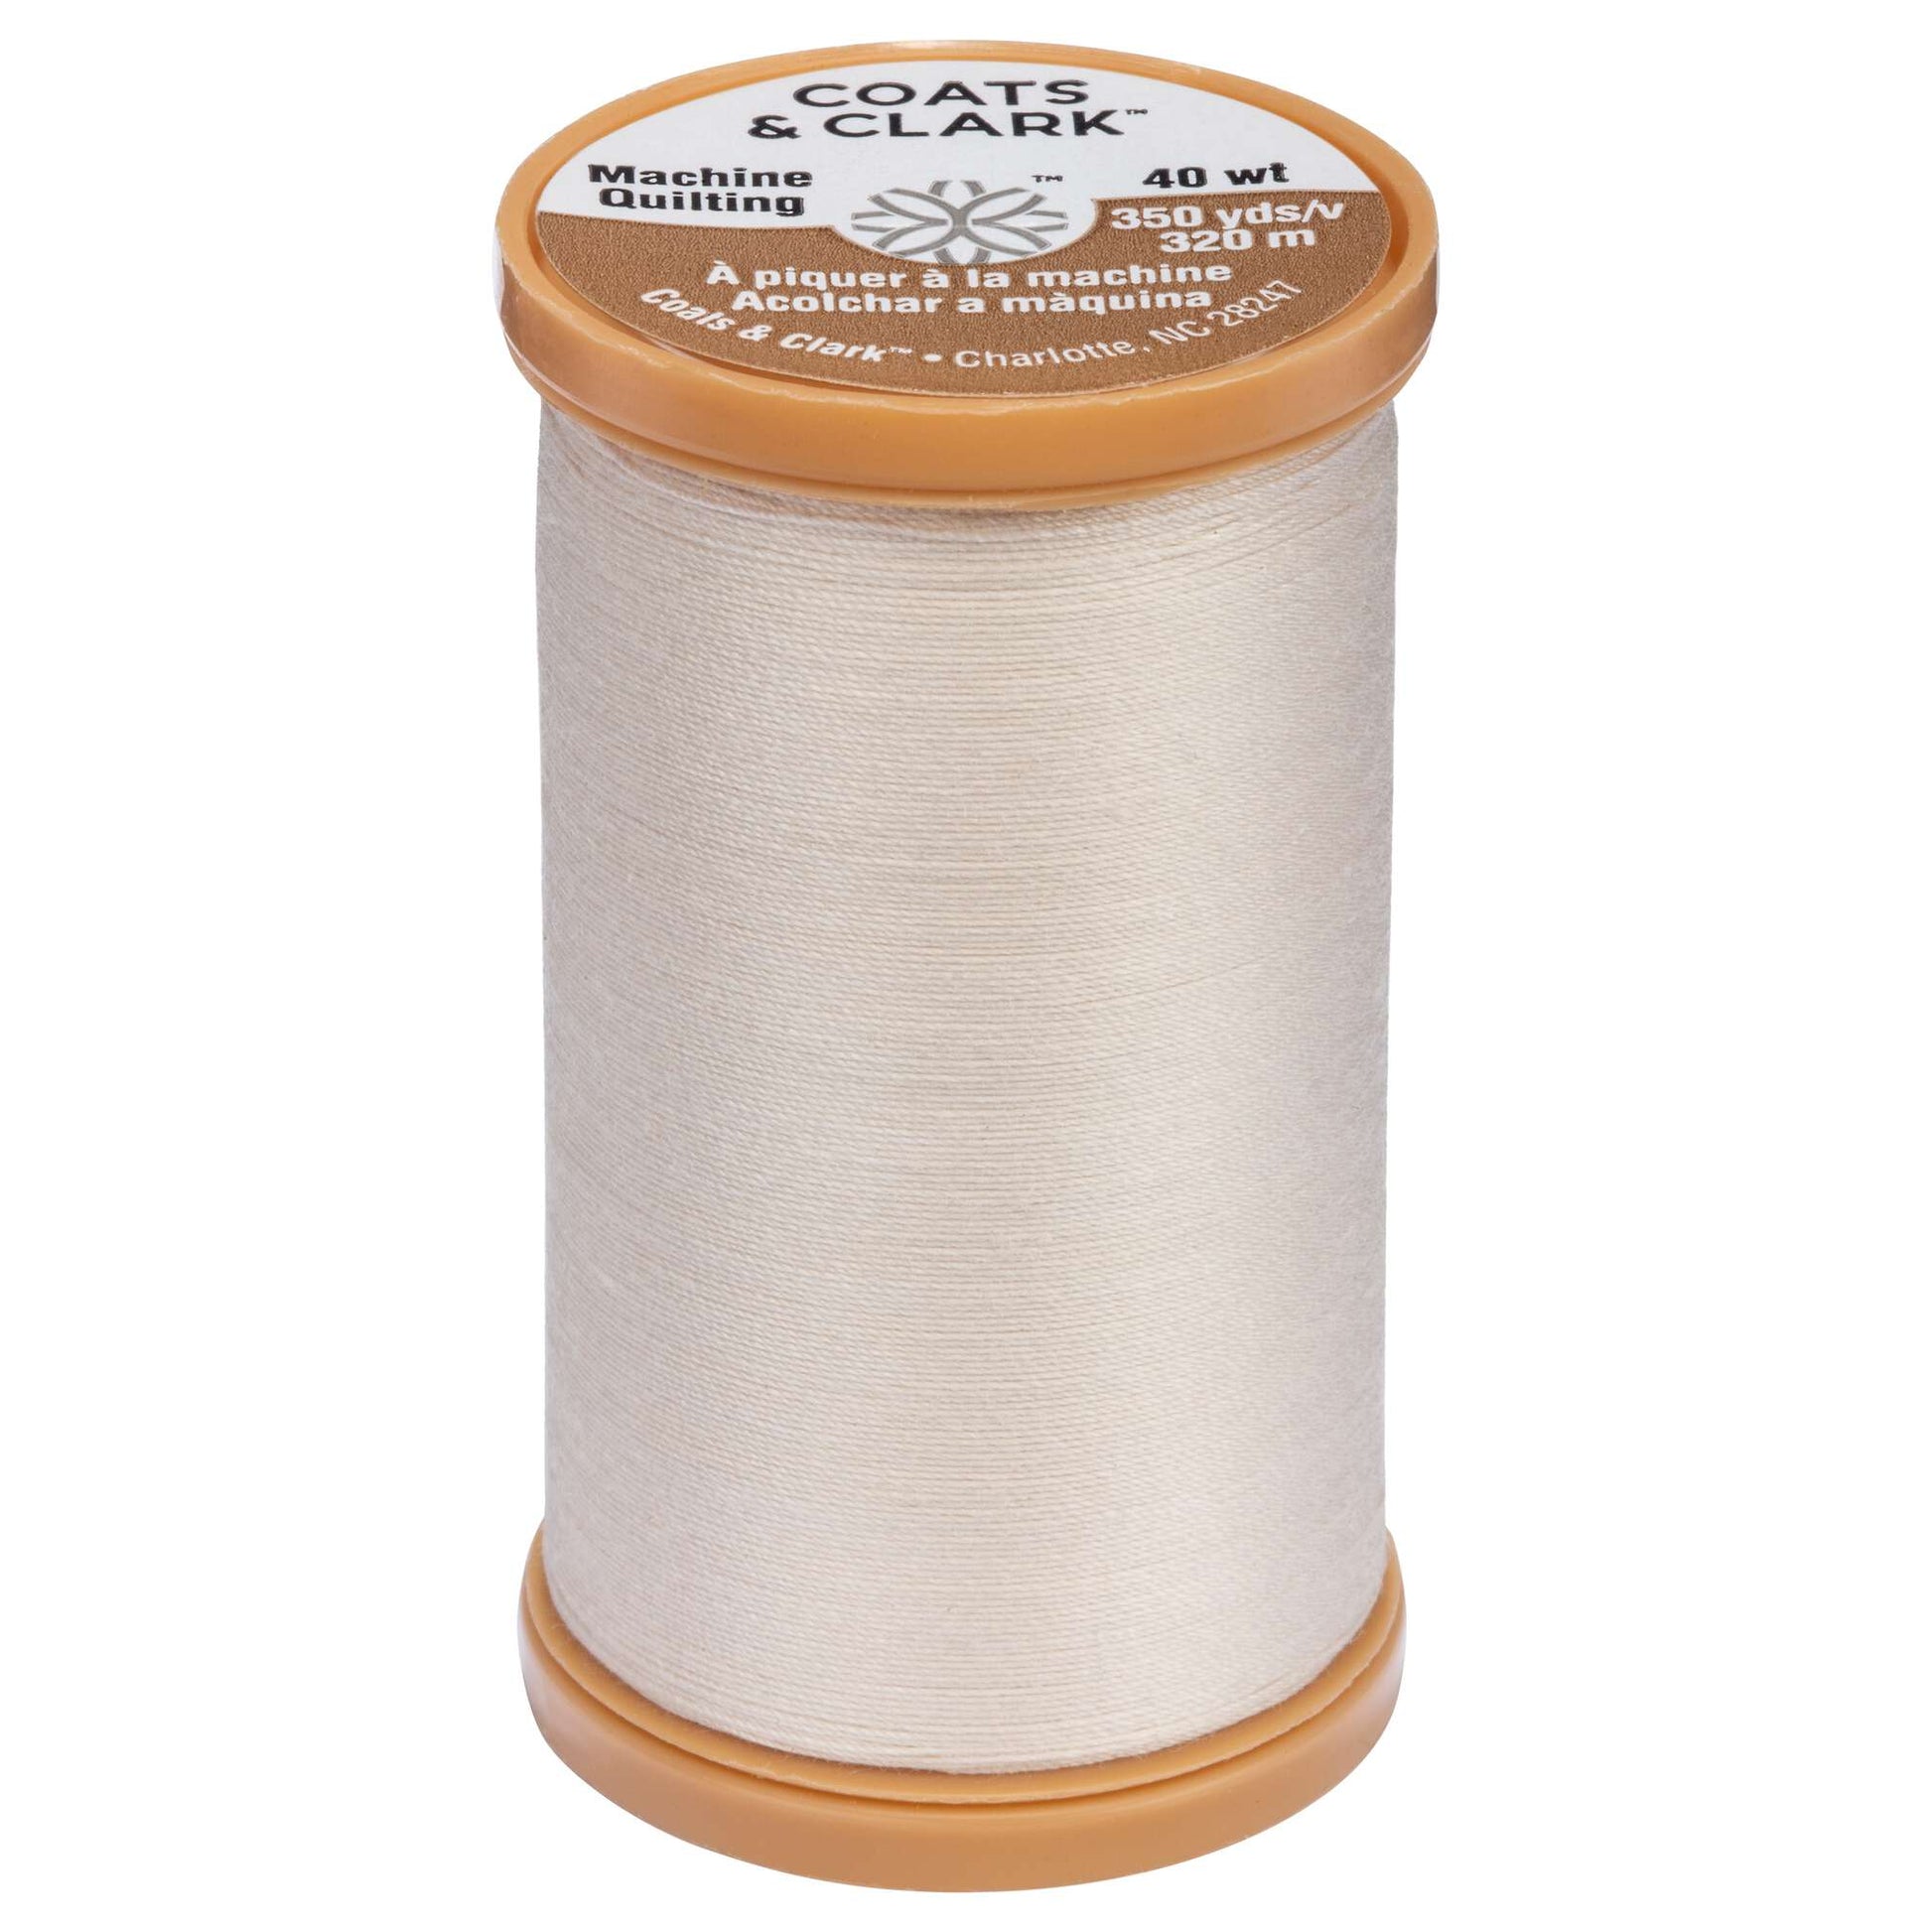 Coats & Clark Cotton Machine Quilting Thread (350 Yards) Natural